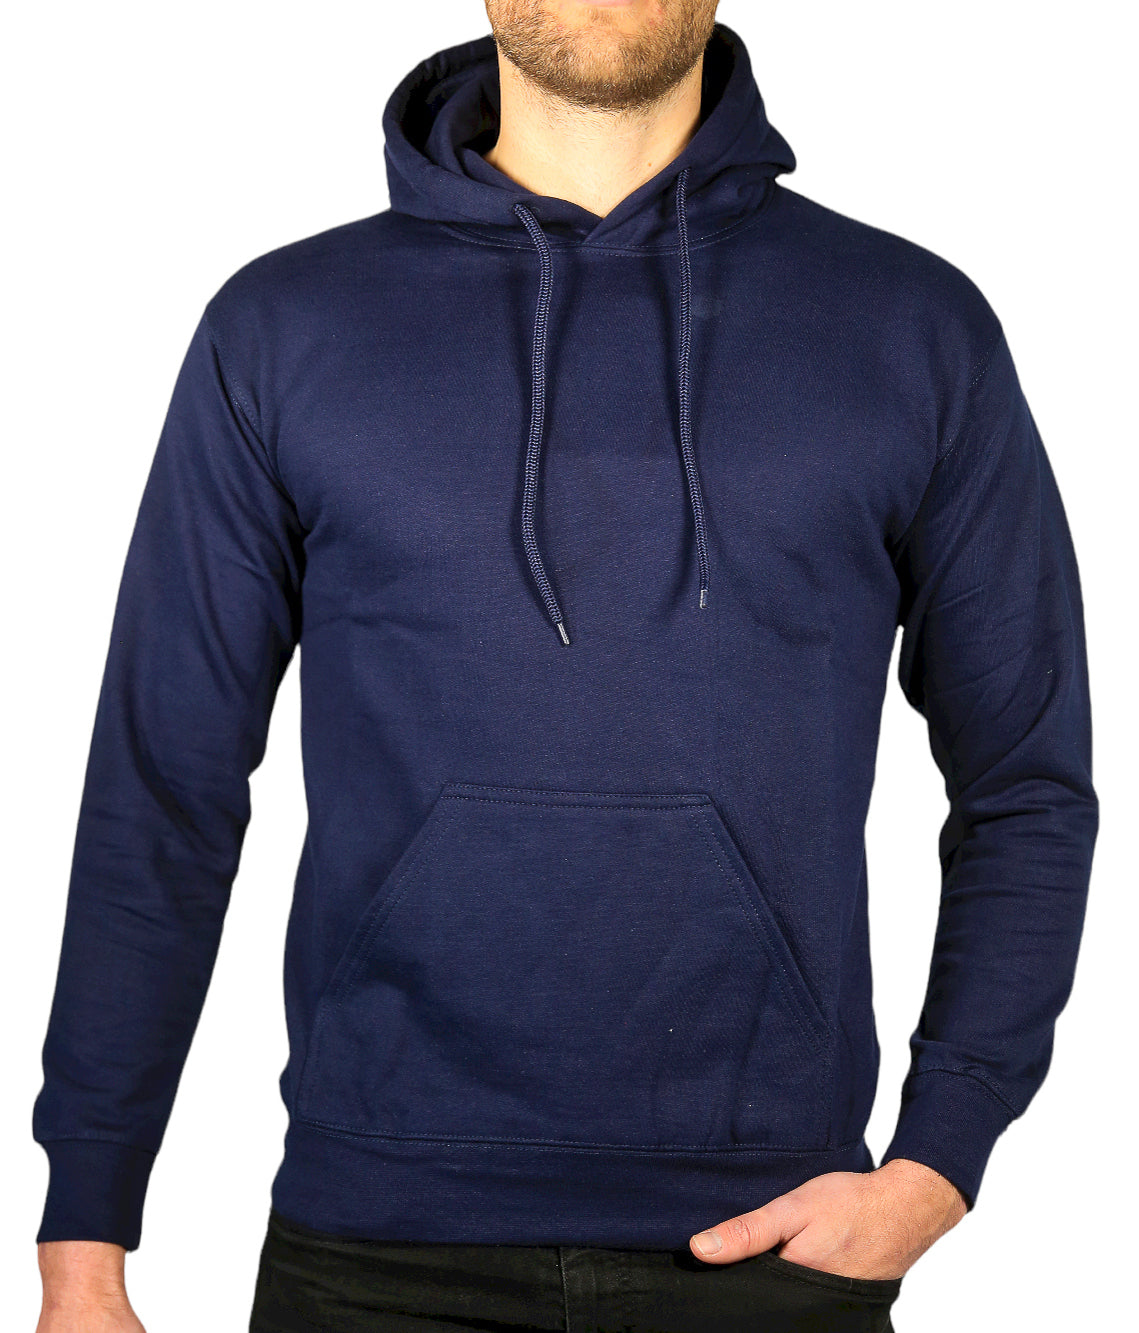 Adult Mens 100% Cotton Fleece Hoodie Jumper Pullover Sweater Warm Sweatshirt - Navy - L